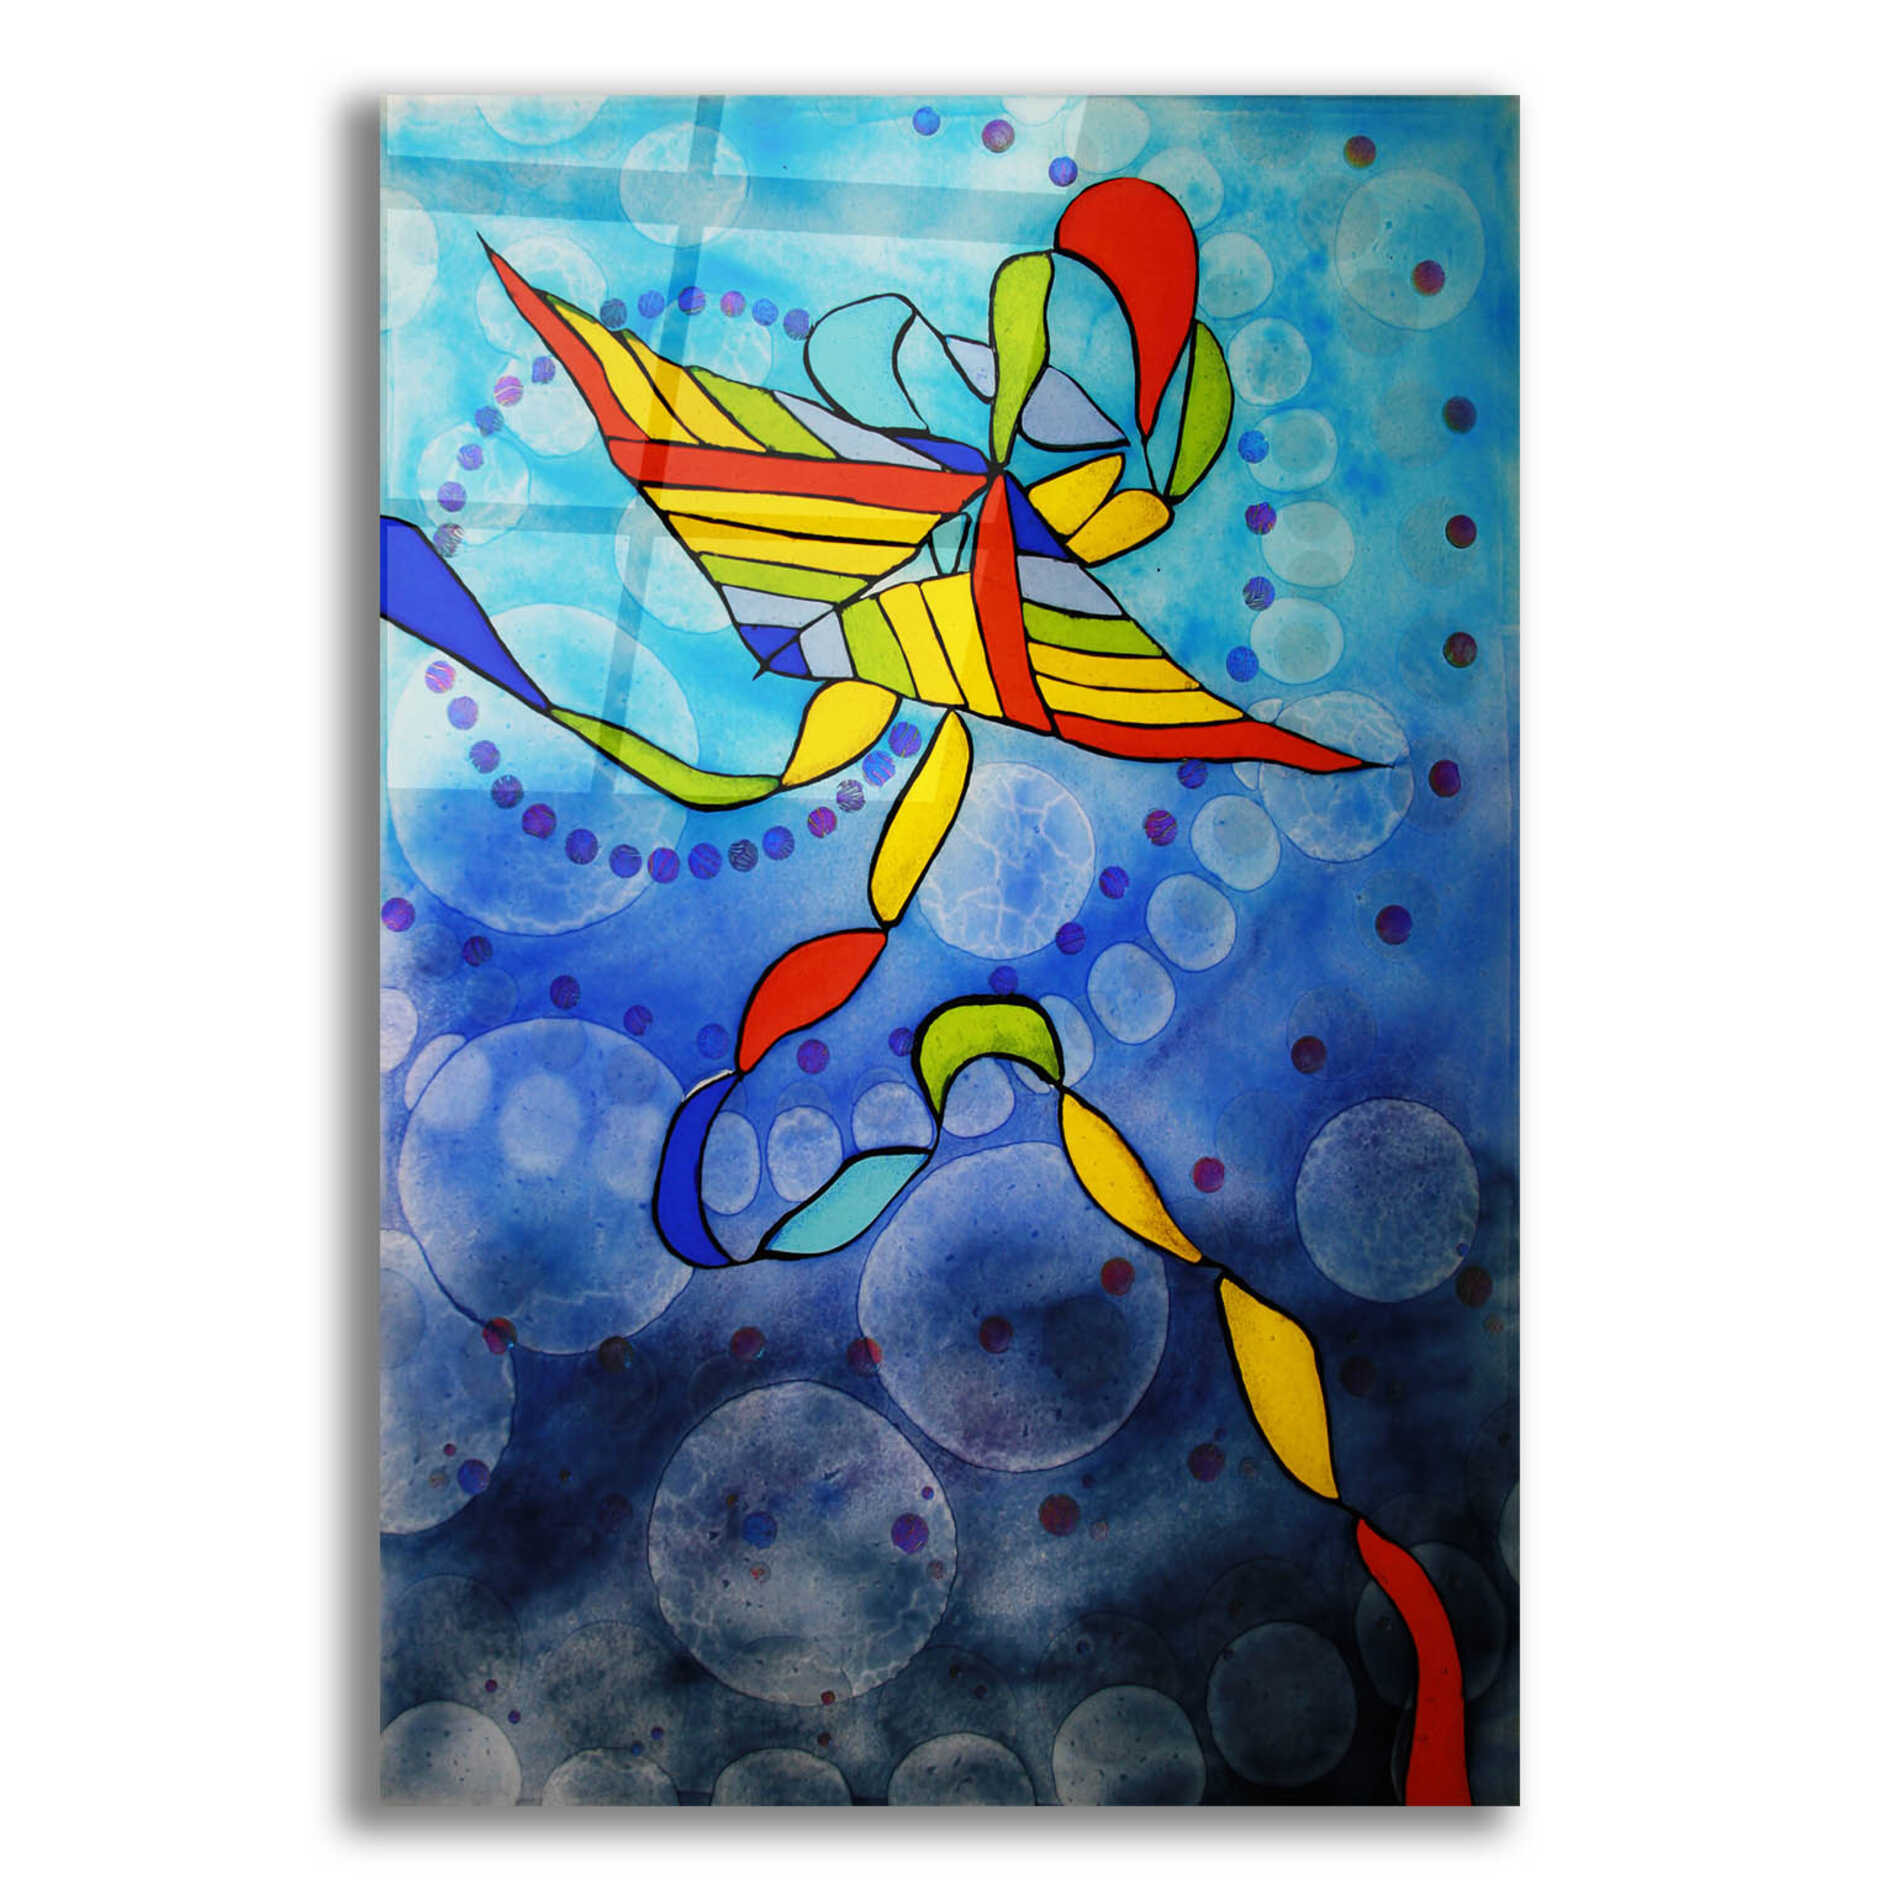 Epic Art 'Kite Transmitted' by Rita Shimelfarb, Acrylic Glass Wall Art,12x16